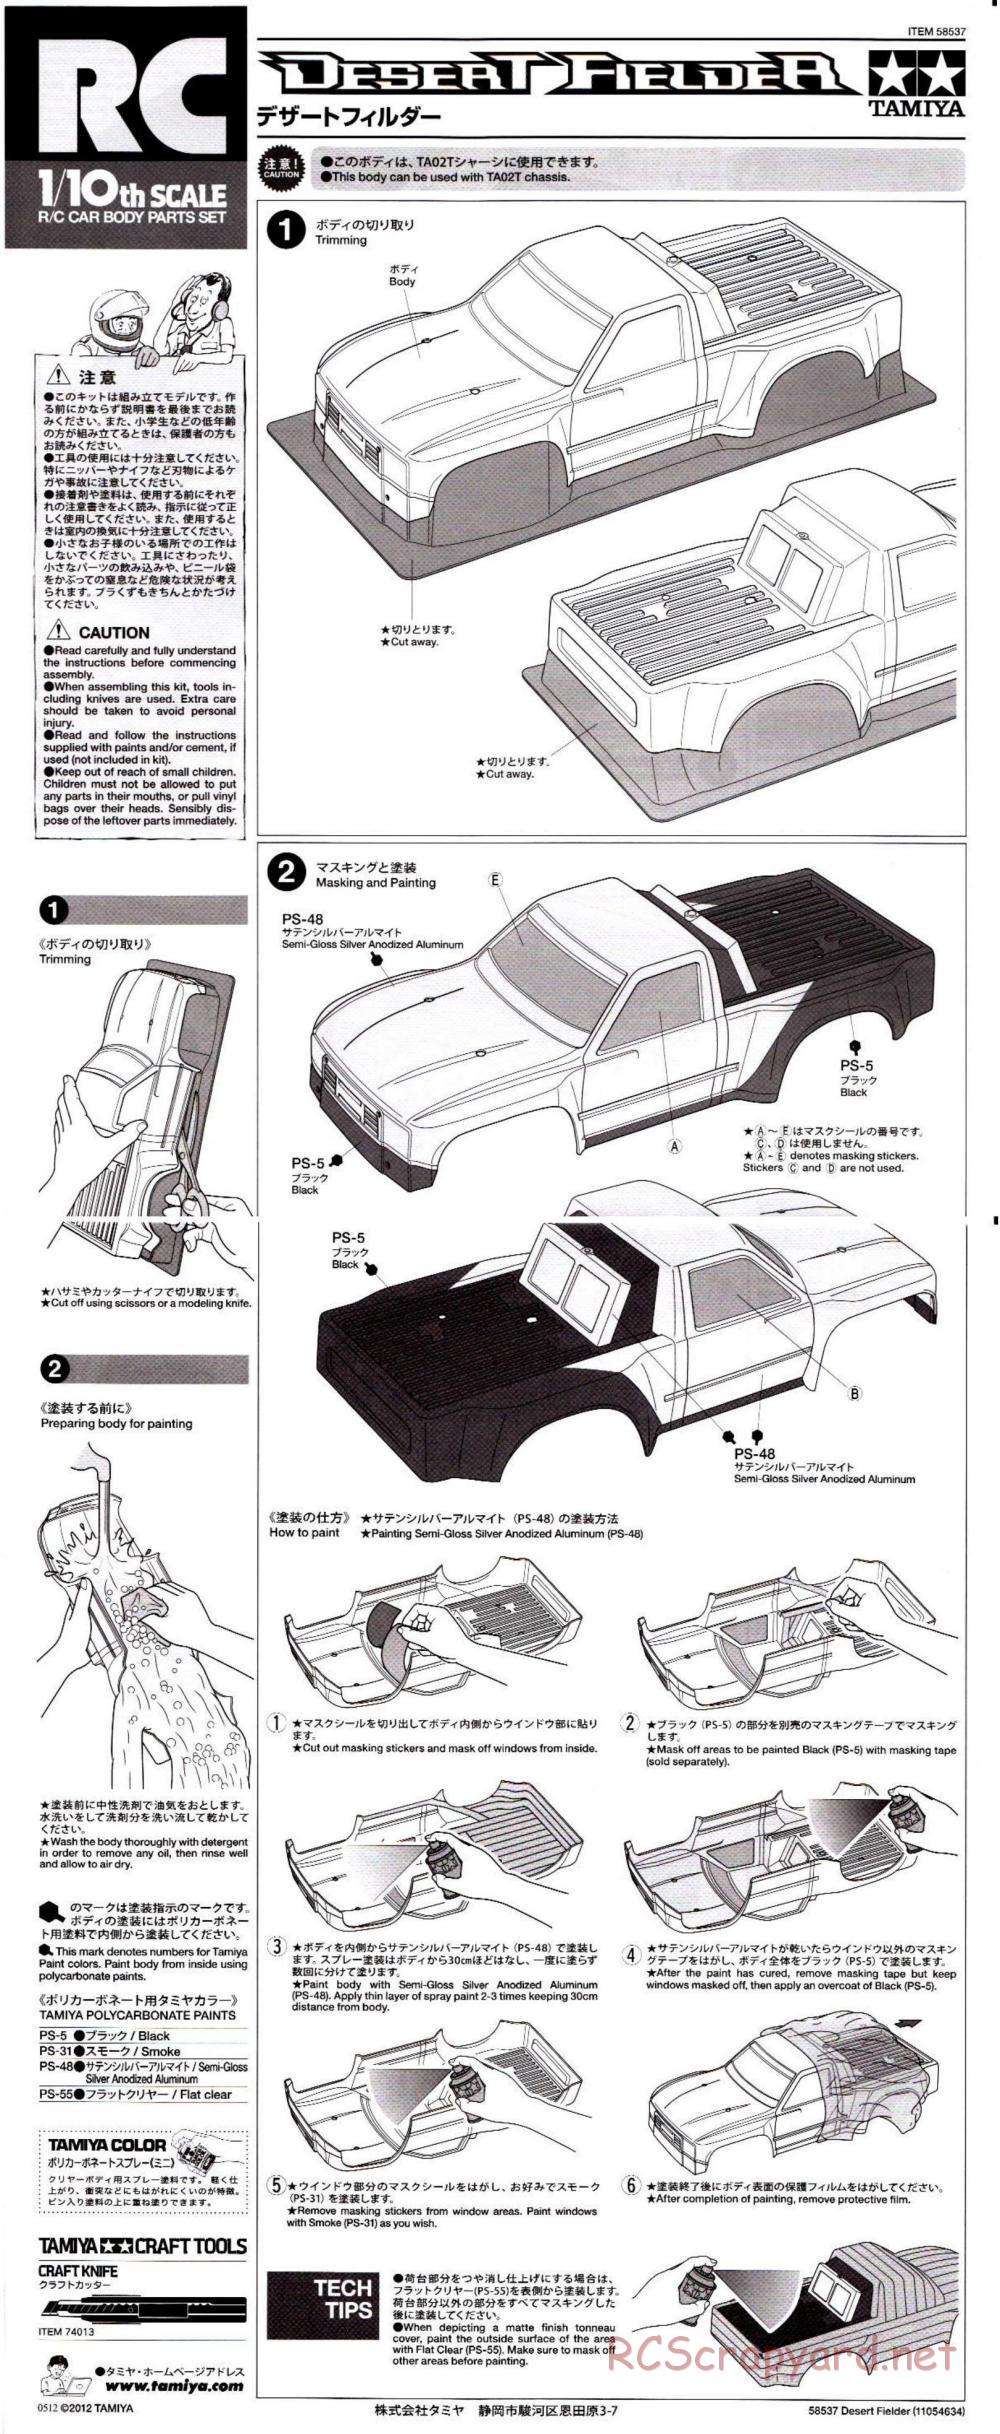 Tamiya - Desert Fielder - TA-02T Chassis - Body Manual - Page 1